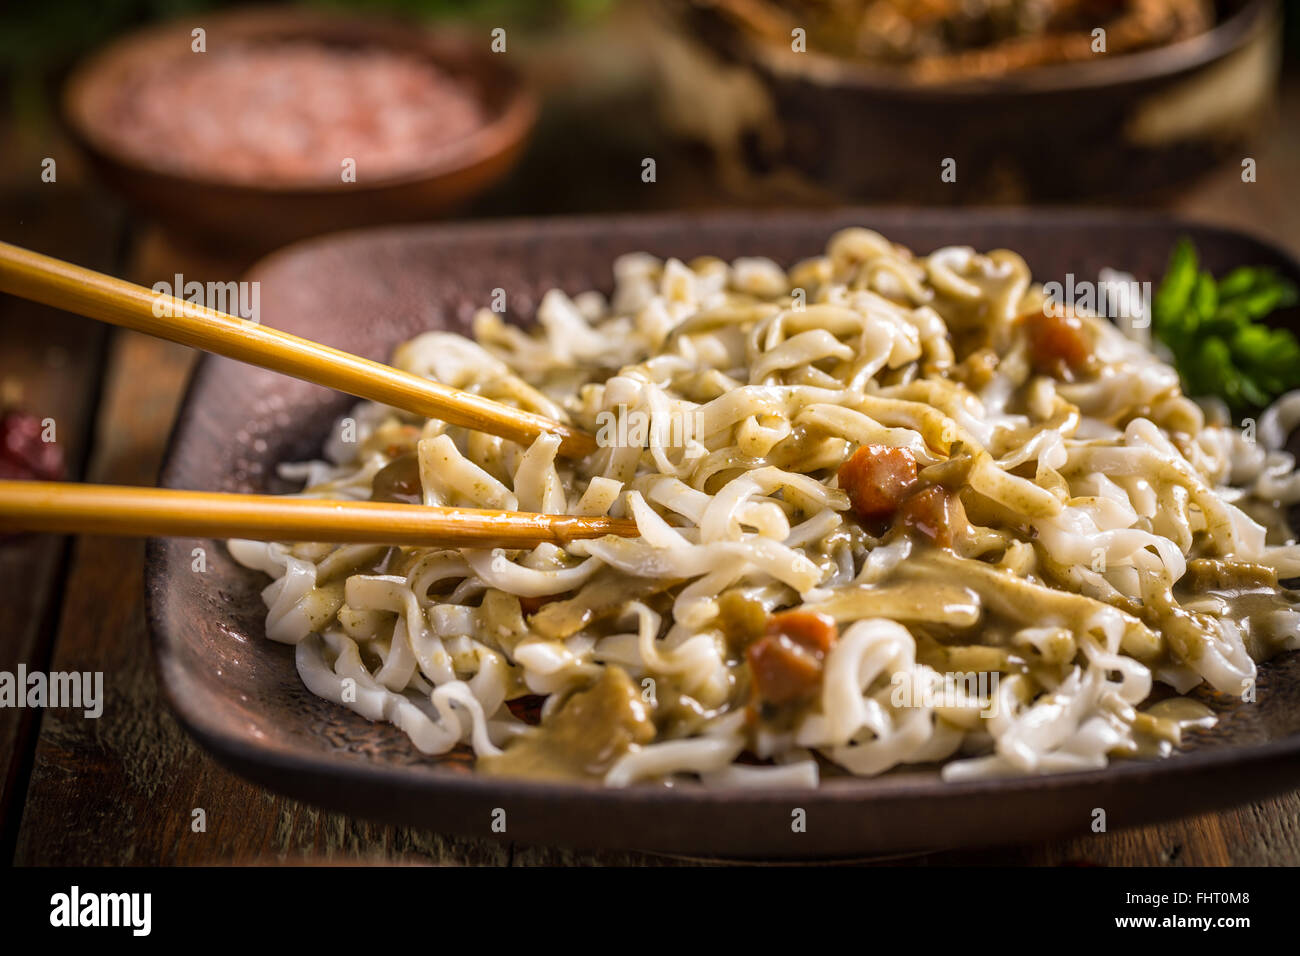 Schüssel Nudeln mit grüner Currysauce Stockfoto